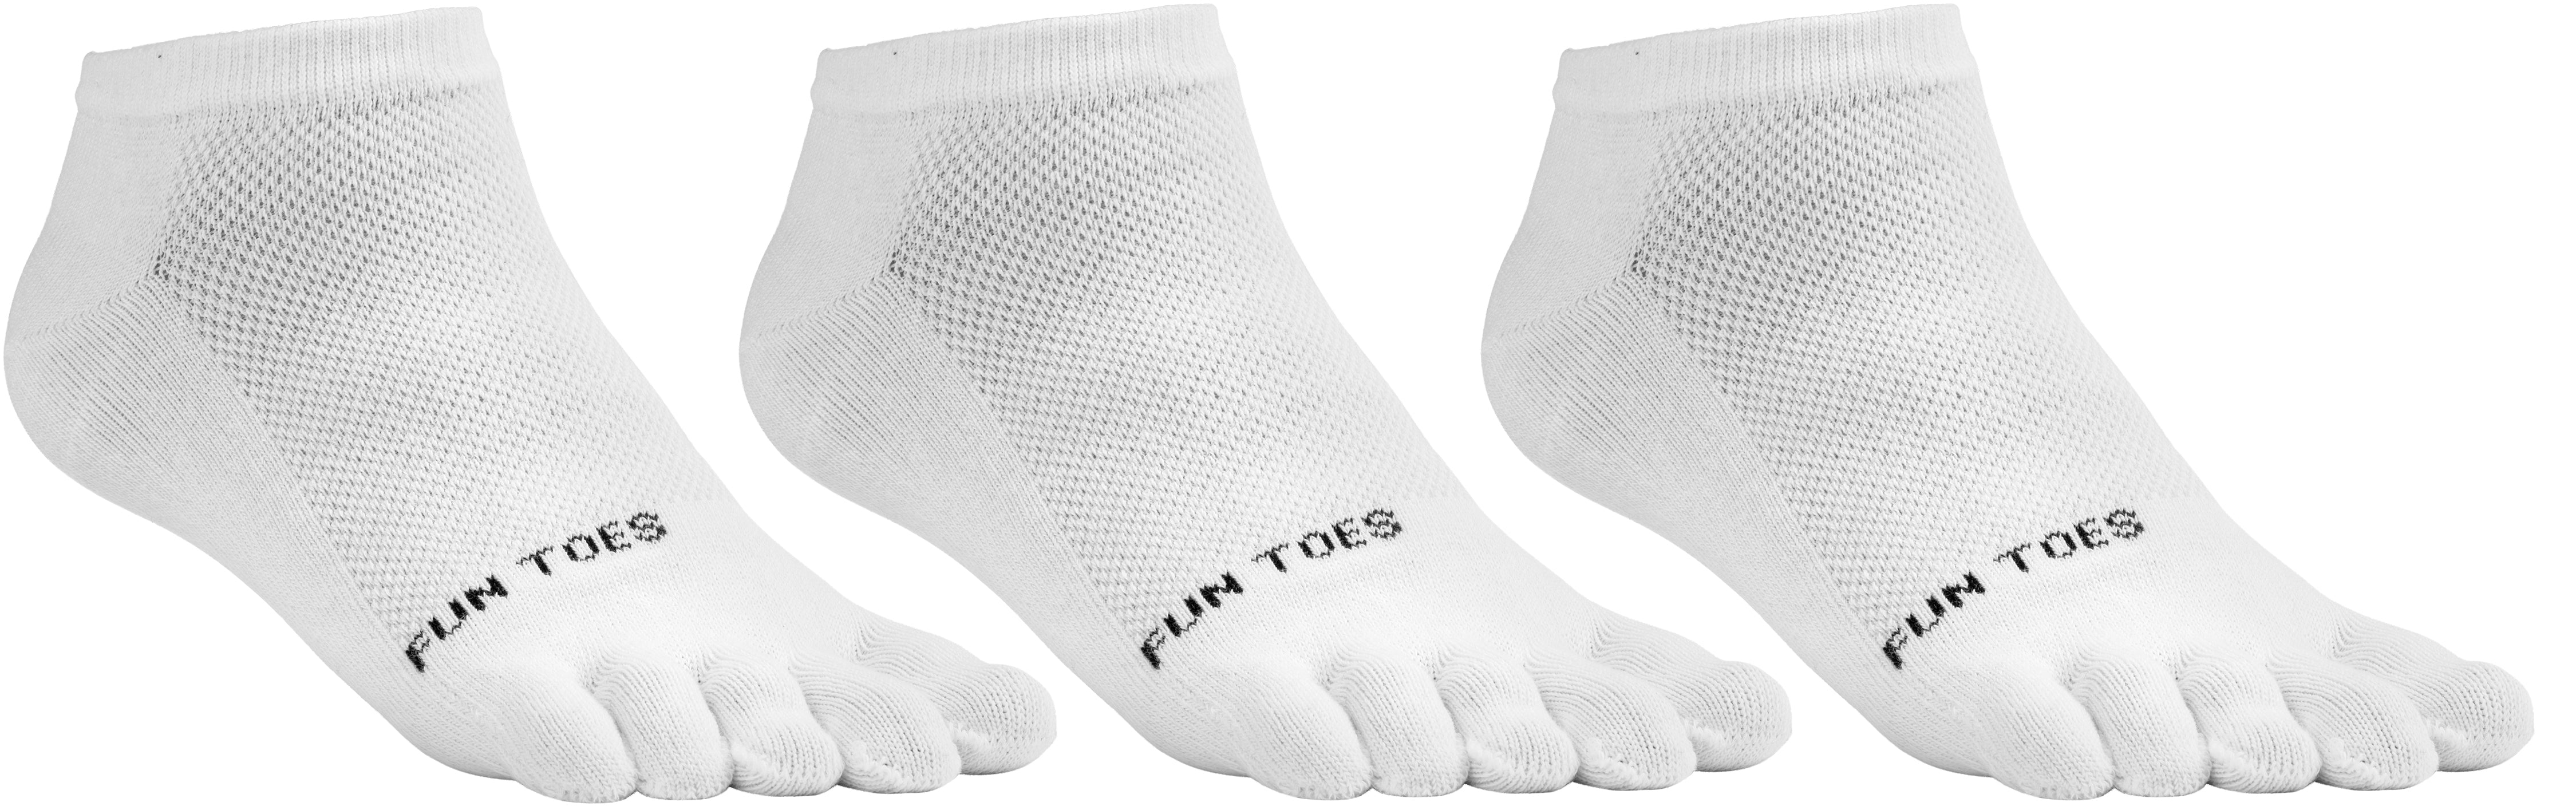 FUN TOES Men's Toe Socks Barefoot Running Socks Size 10-13 Shoe Size 6 - 12.5  Pack of 3 Pairs  White